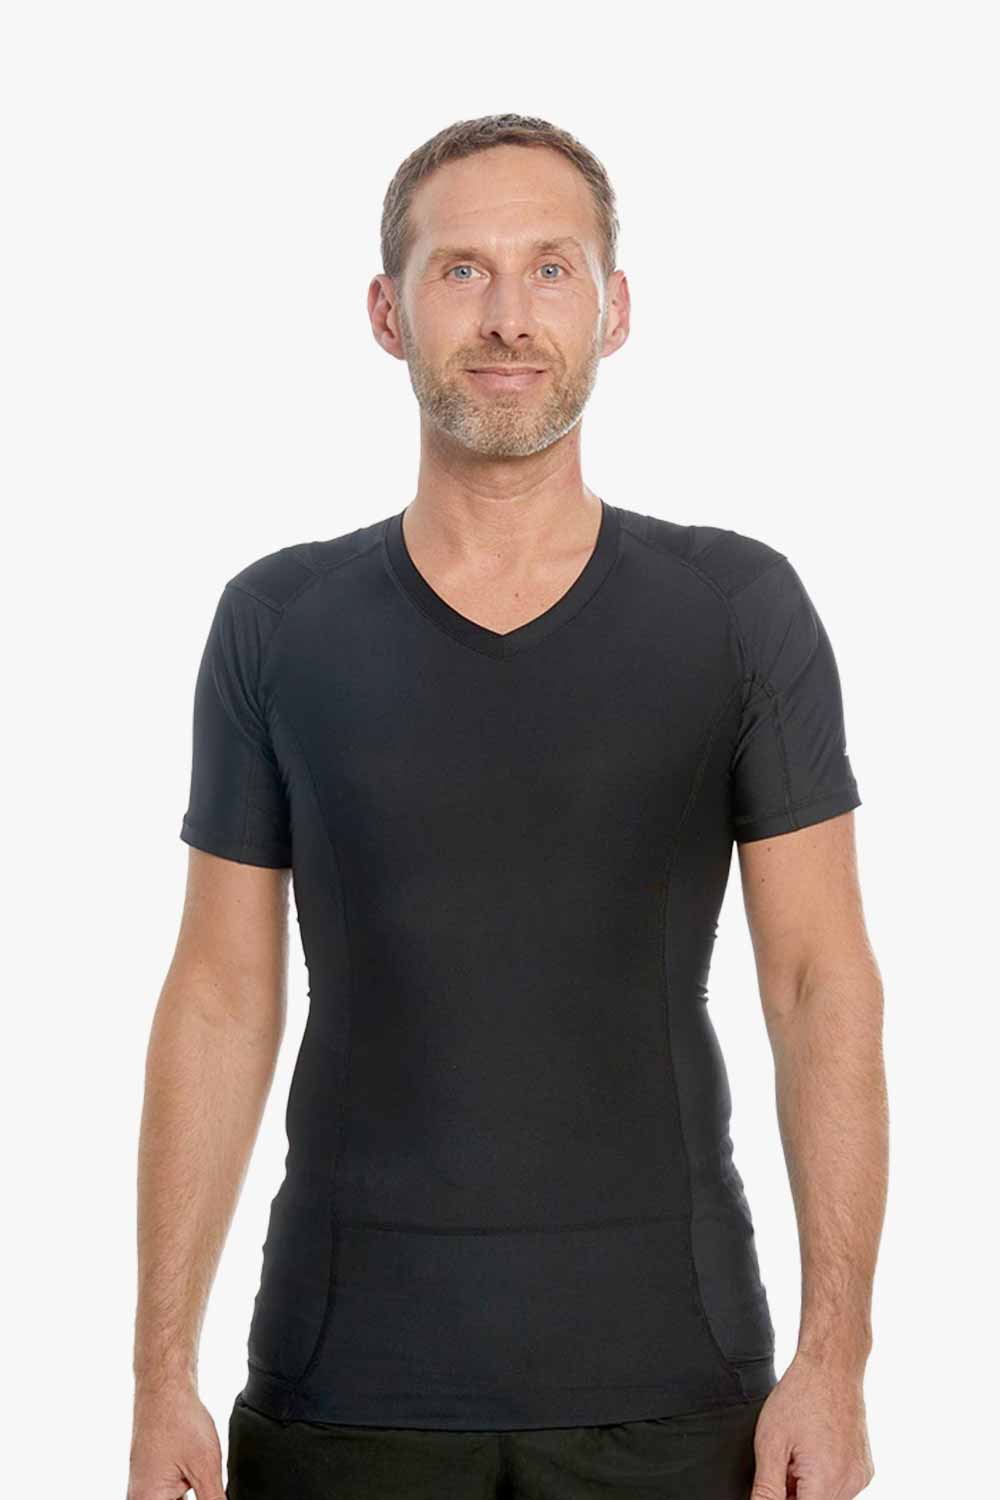 Posture Shirt 2.0 - Shirt That Helps Improve Posture